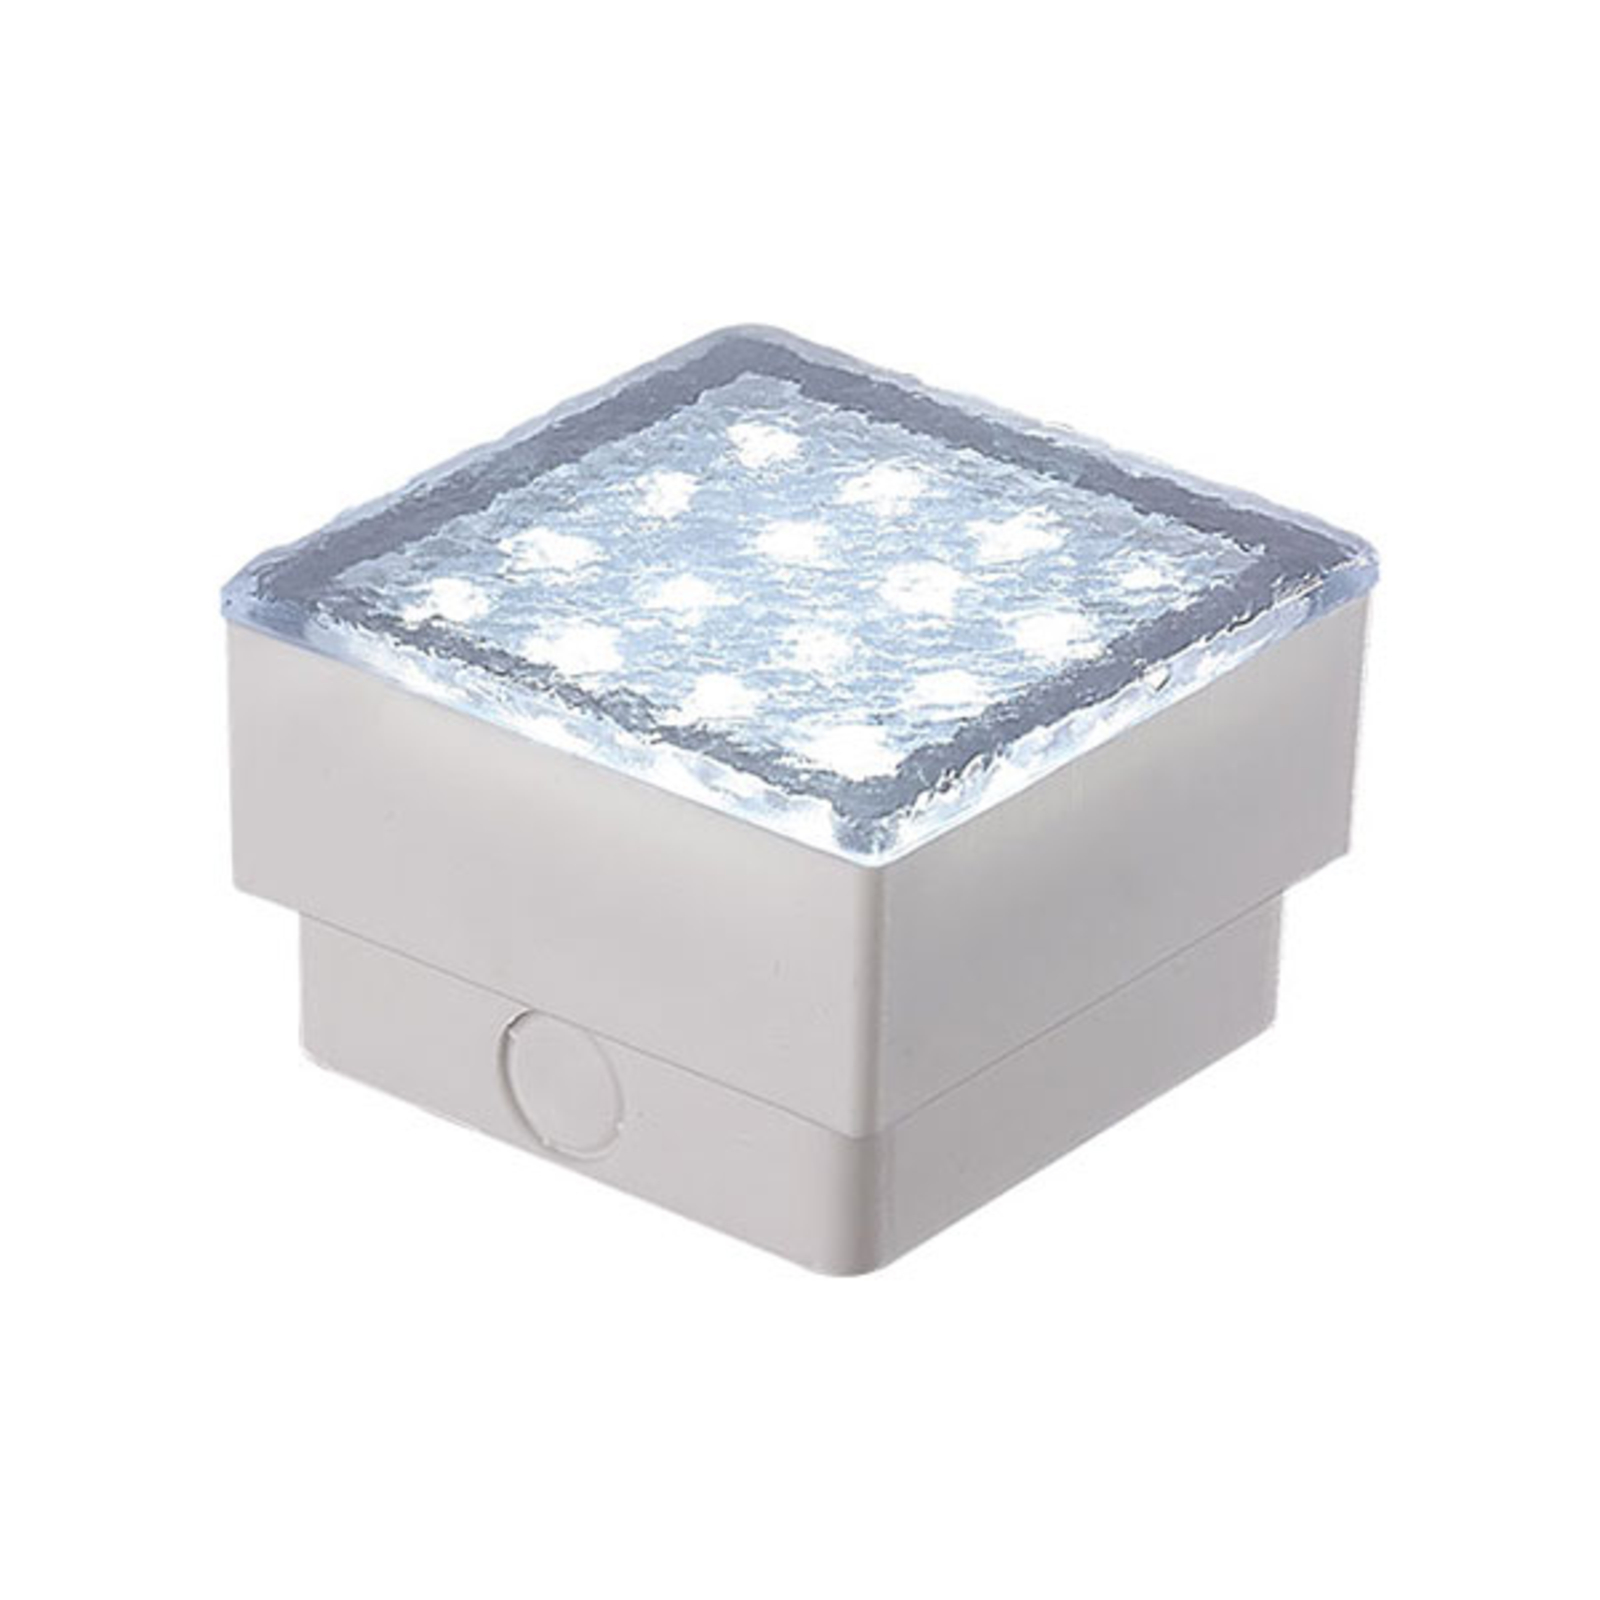 Prios Ewgenie LED podlahové svítidlo, 10 x 10 cm